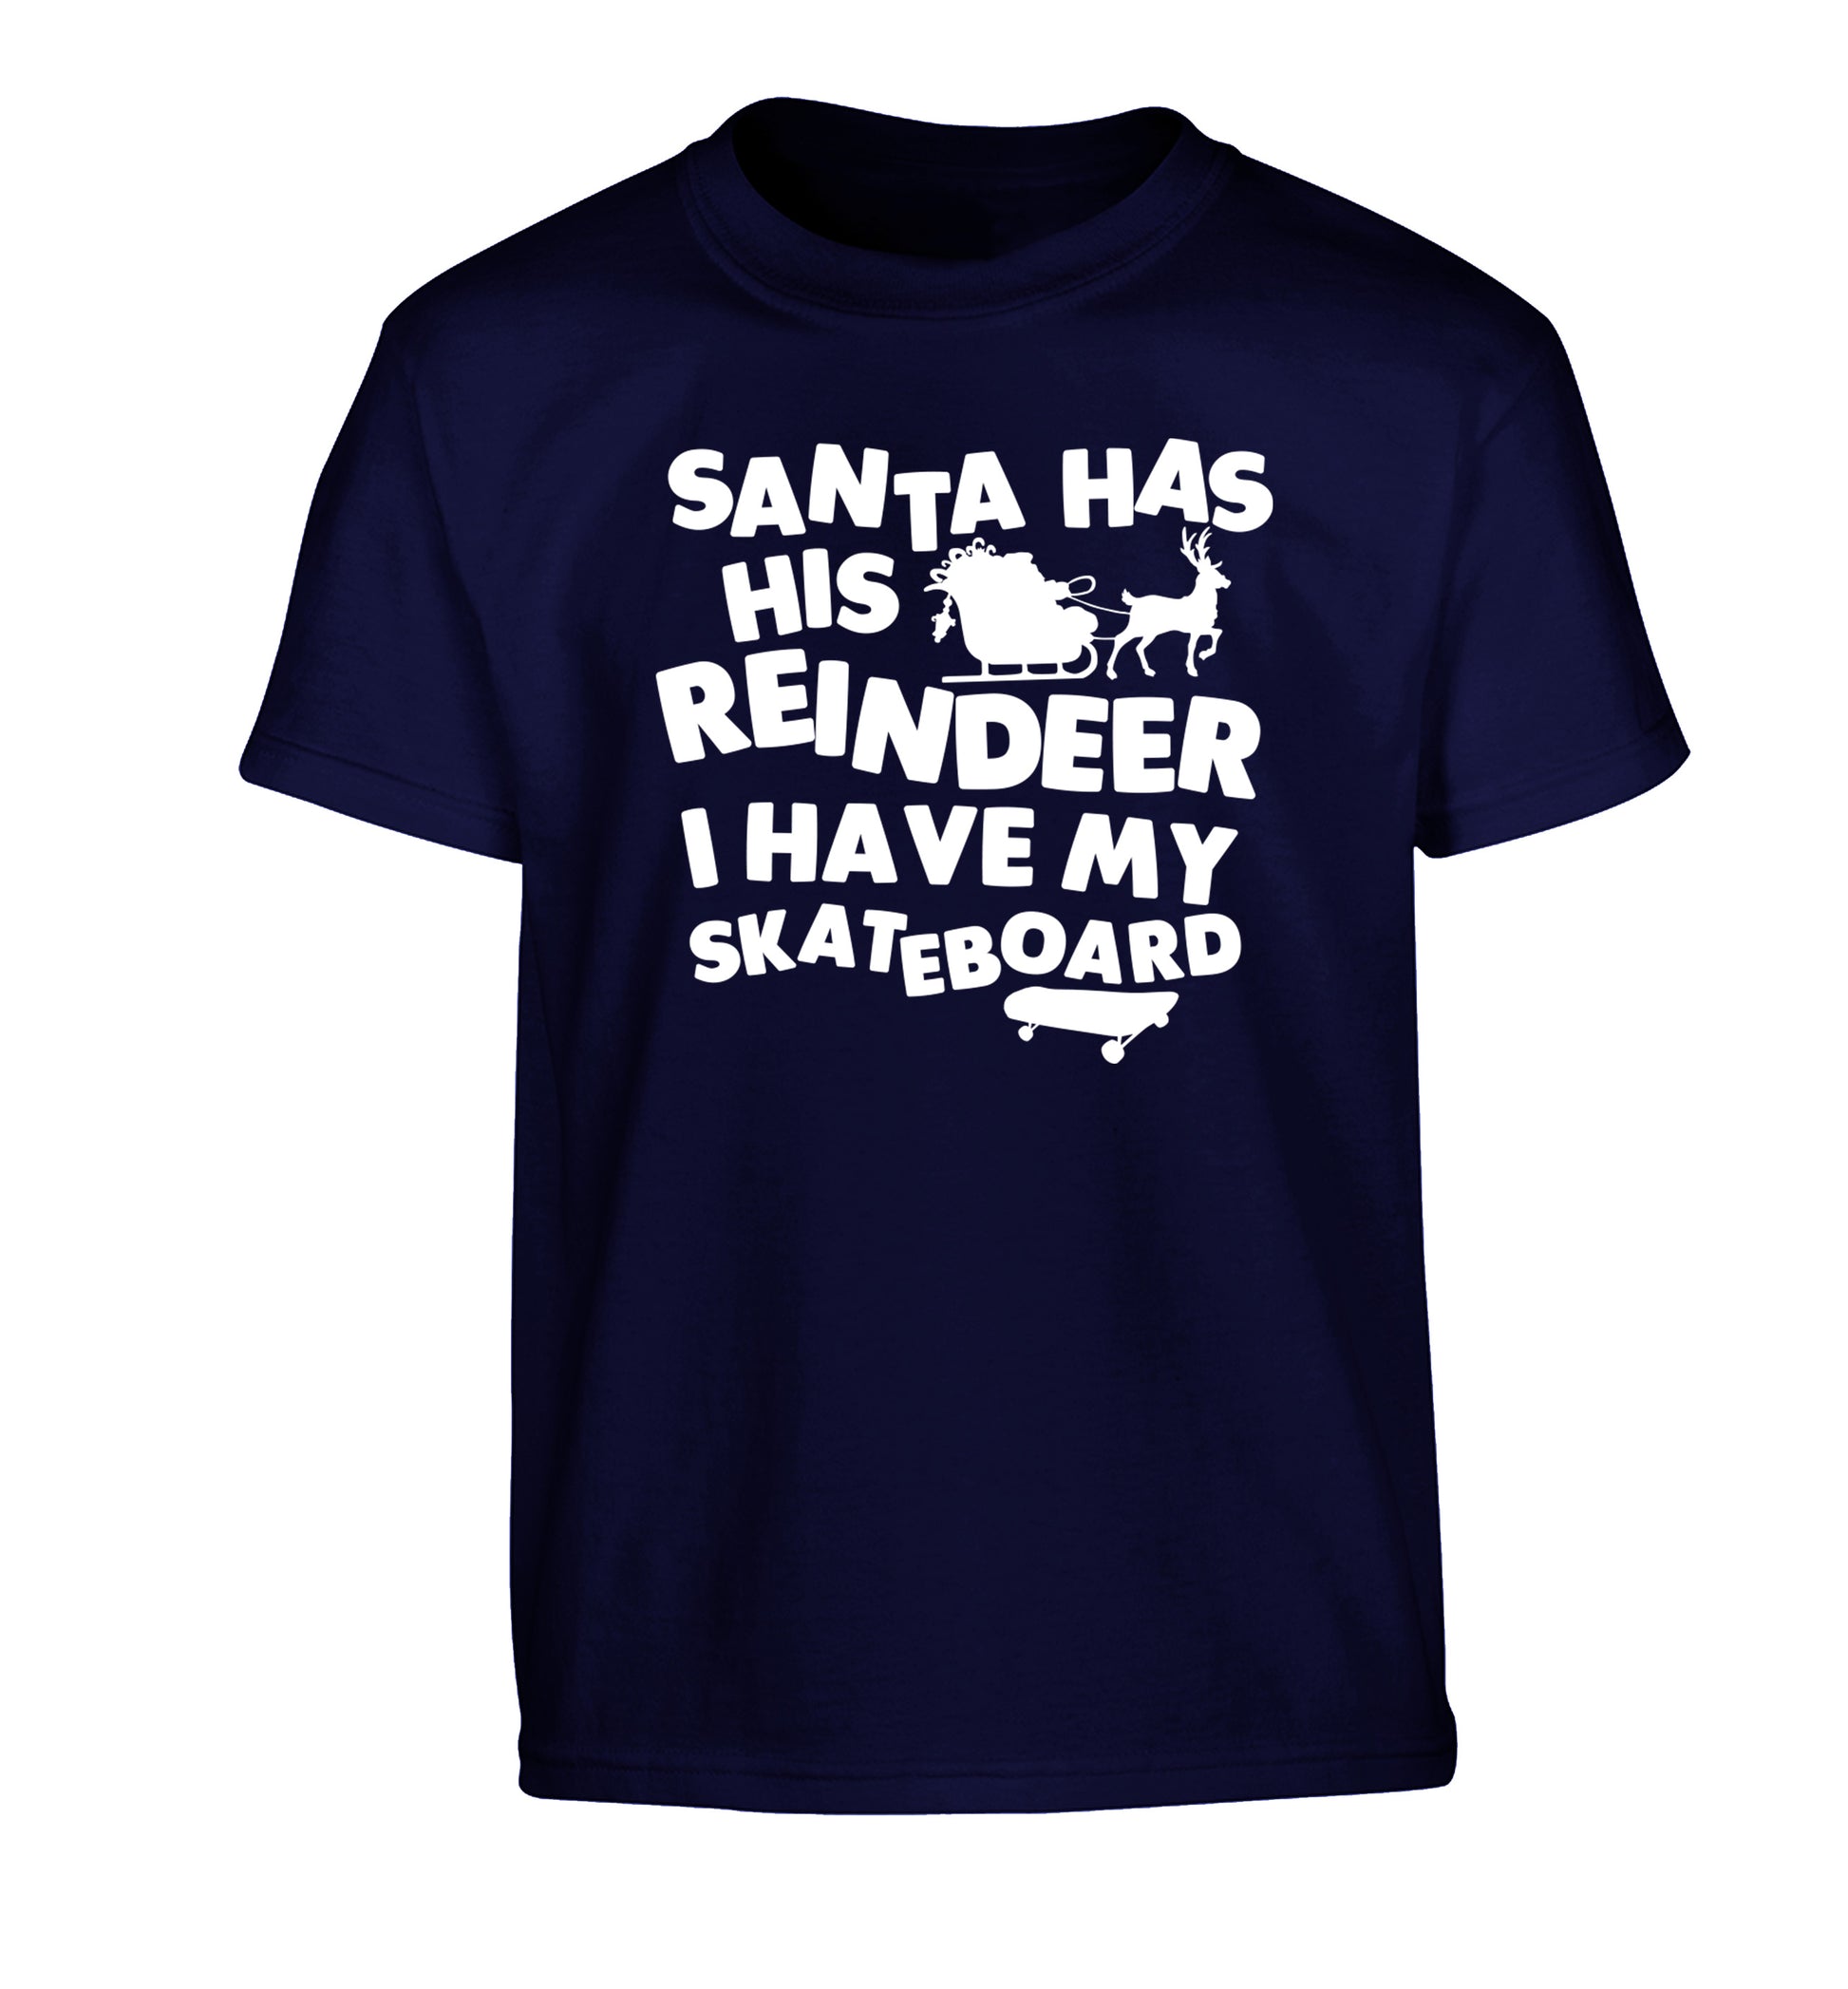 Santa has his reindeer I have my skateboard Children's navy Tshirt 12-14 Years